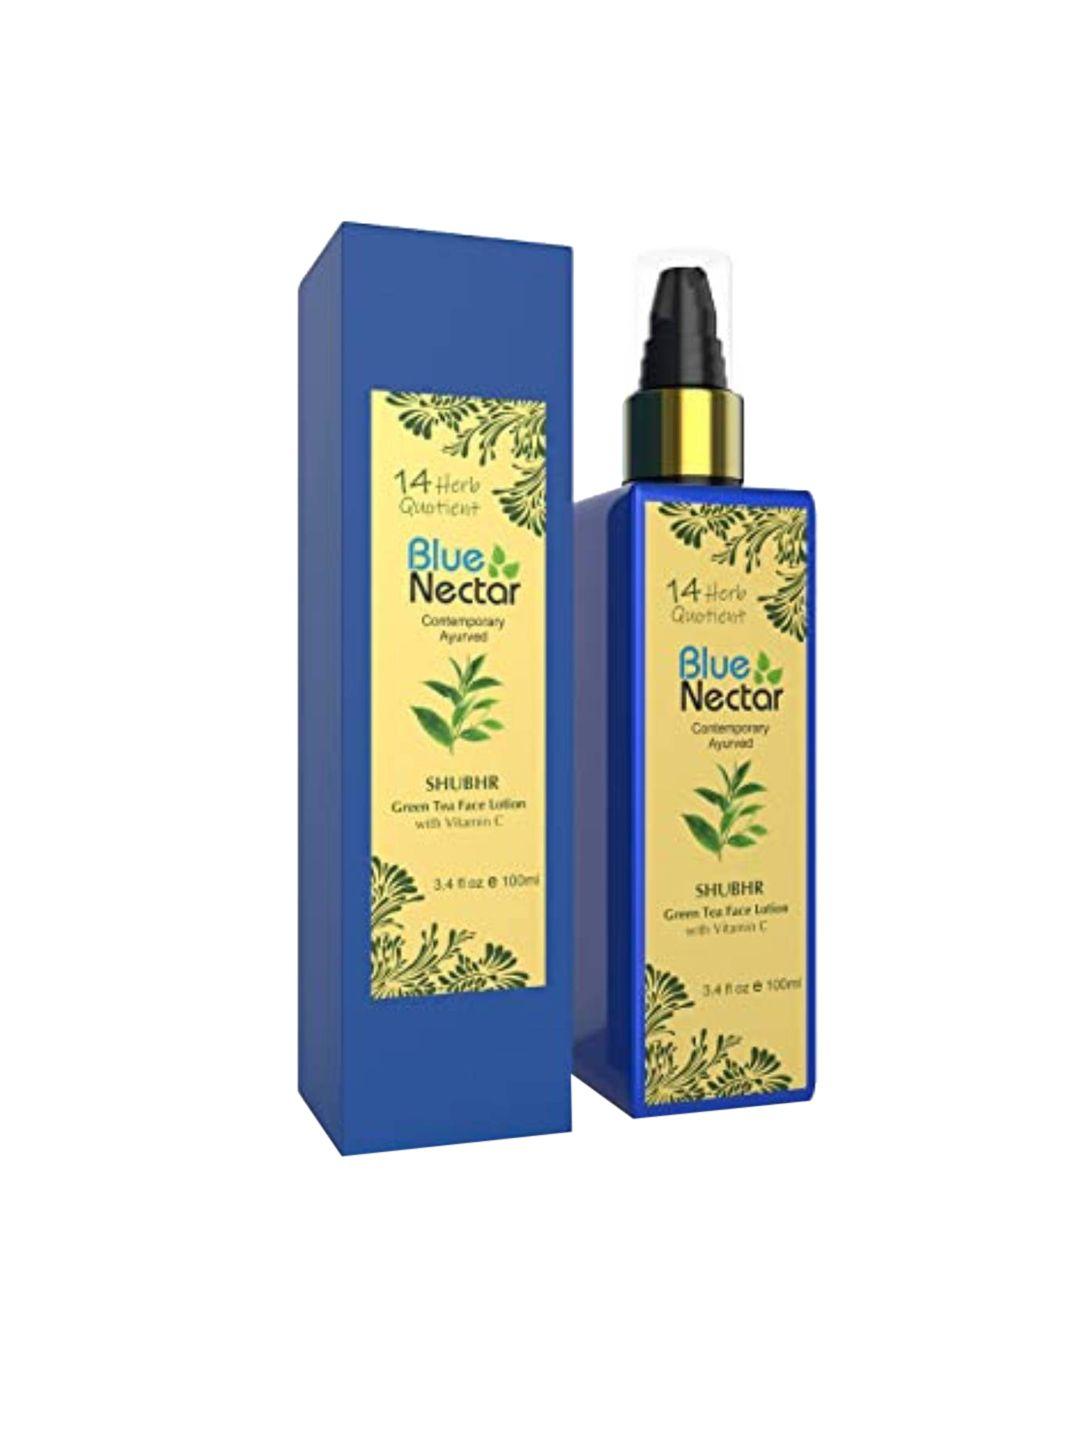 blue nectar shubhr green tea face moisturizer with vitamin c for glowing skin - 100 ml